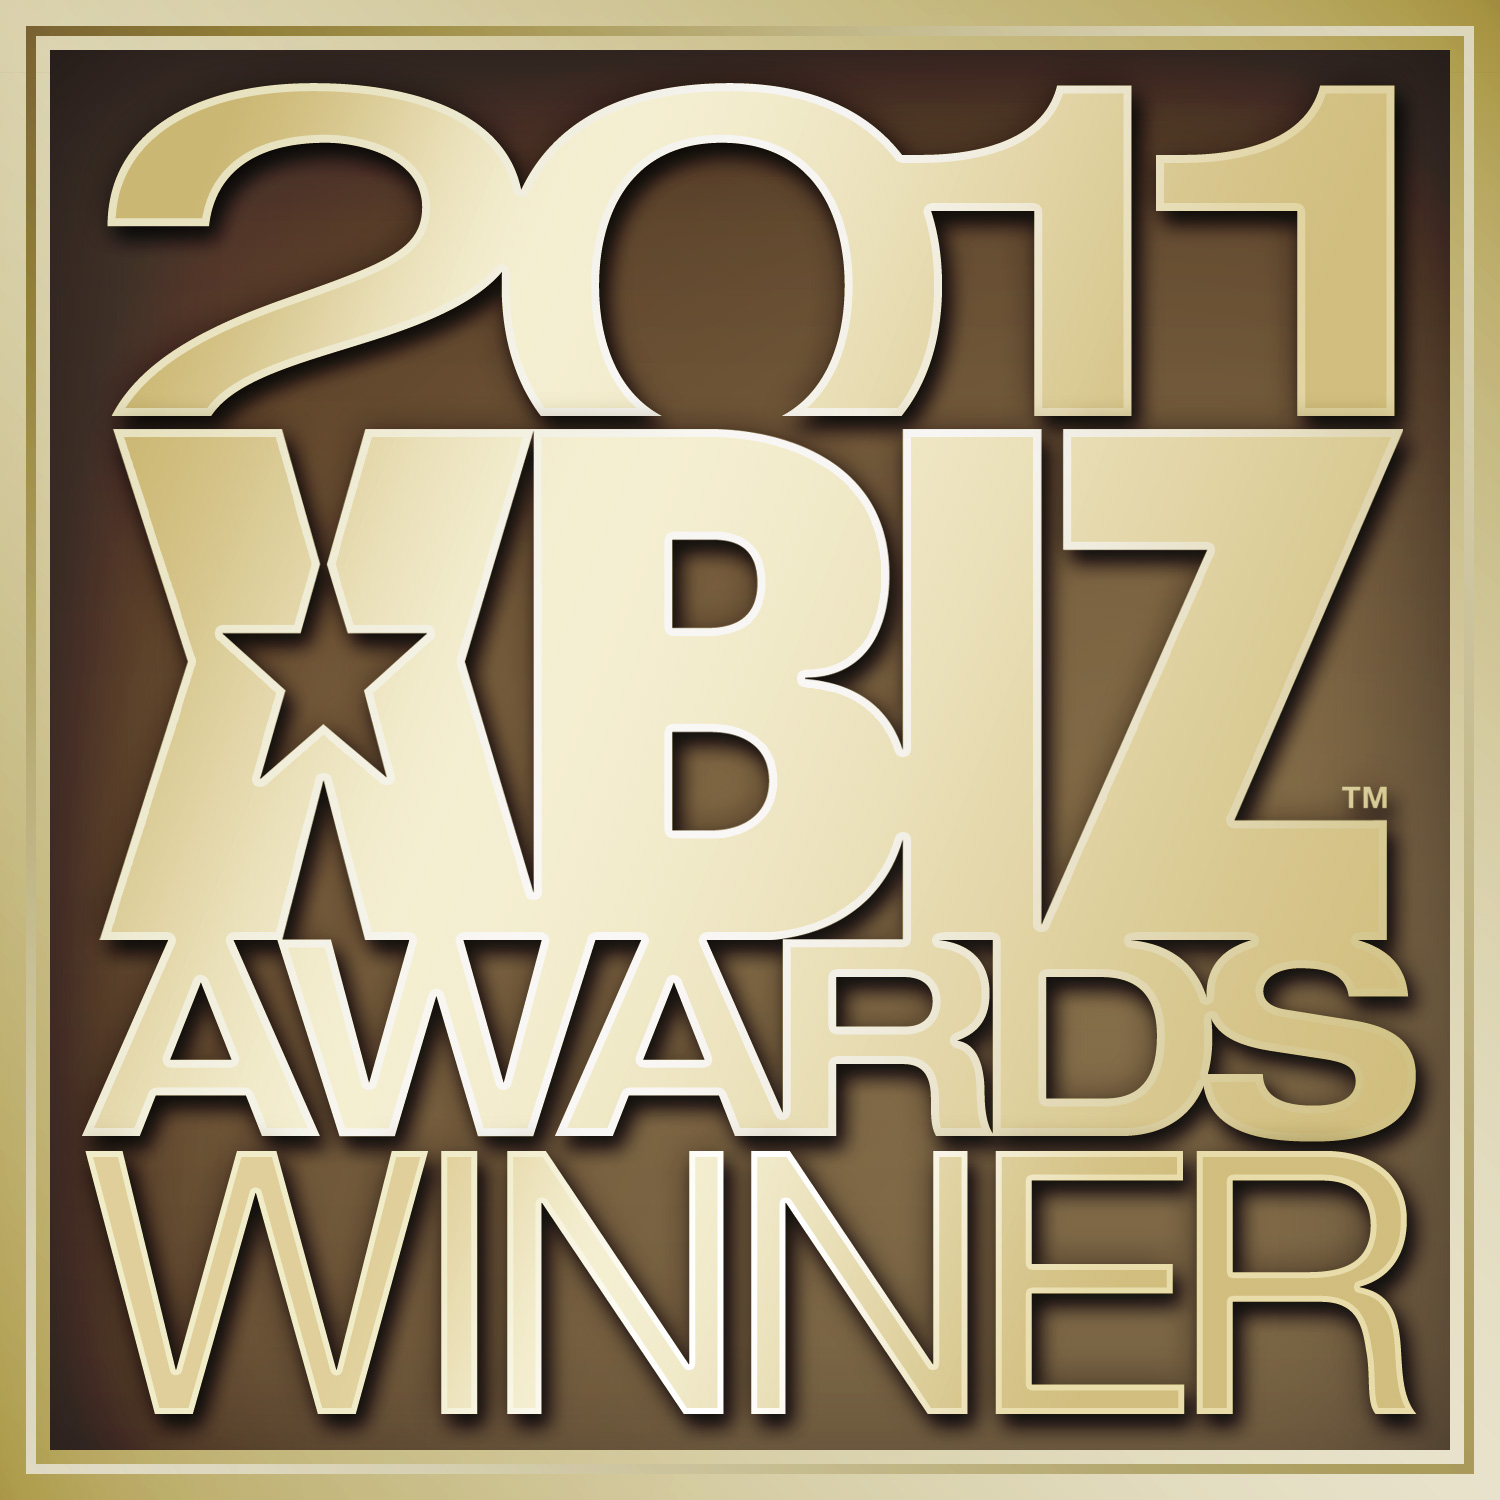 Xba11 winner hires.jpg